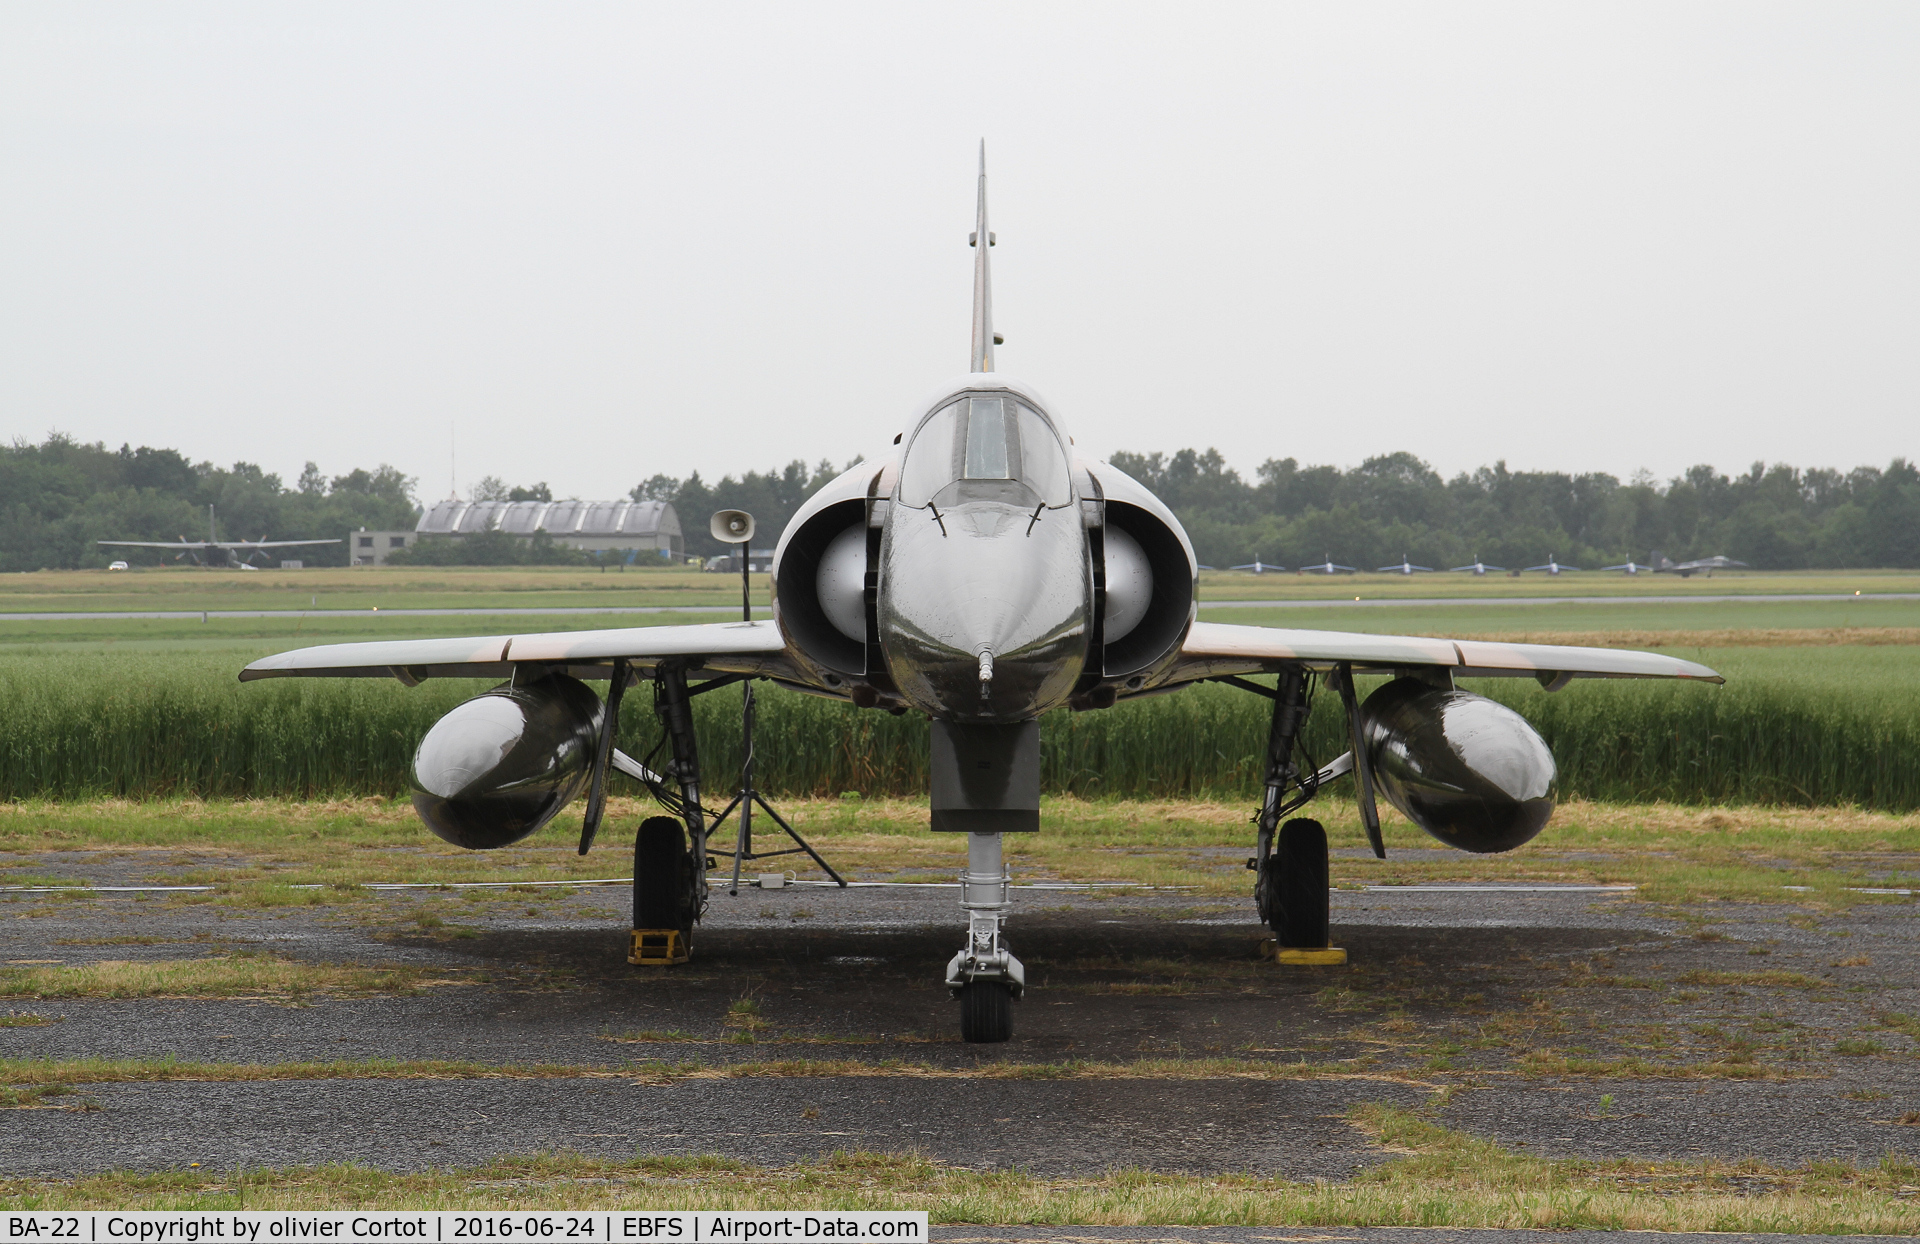 BA-22, Dassault Mirage 5BA C/N 22, front view of this nice Mirage V